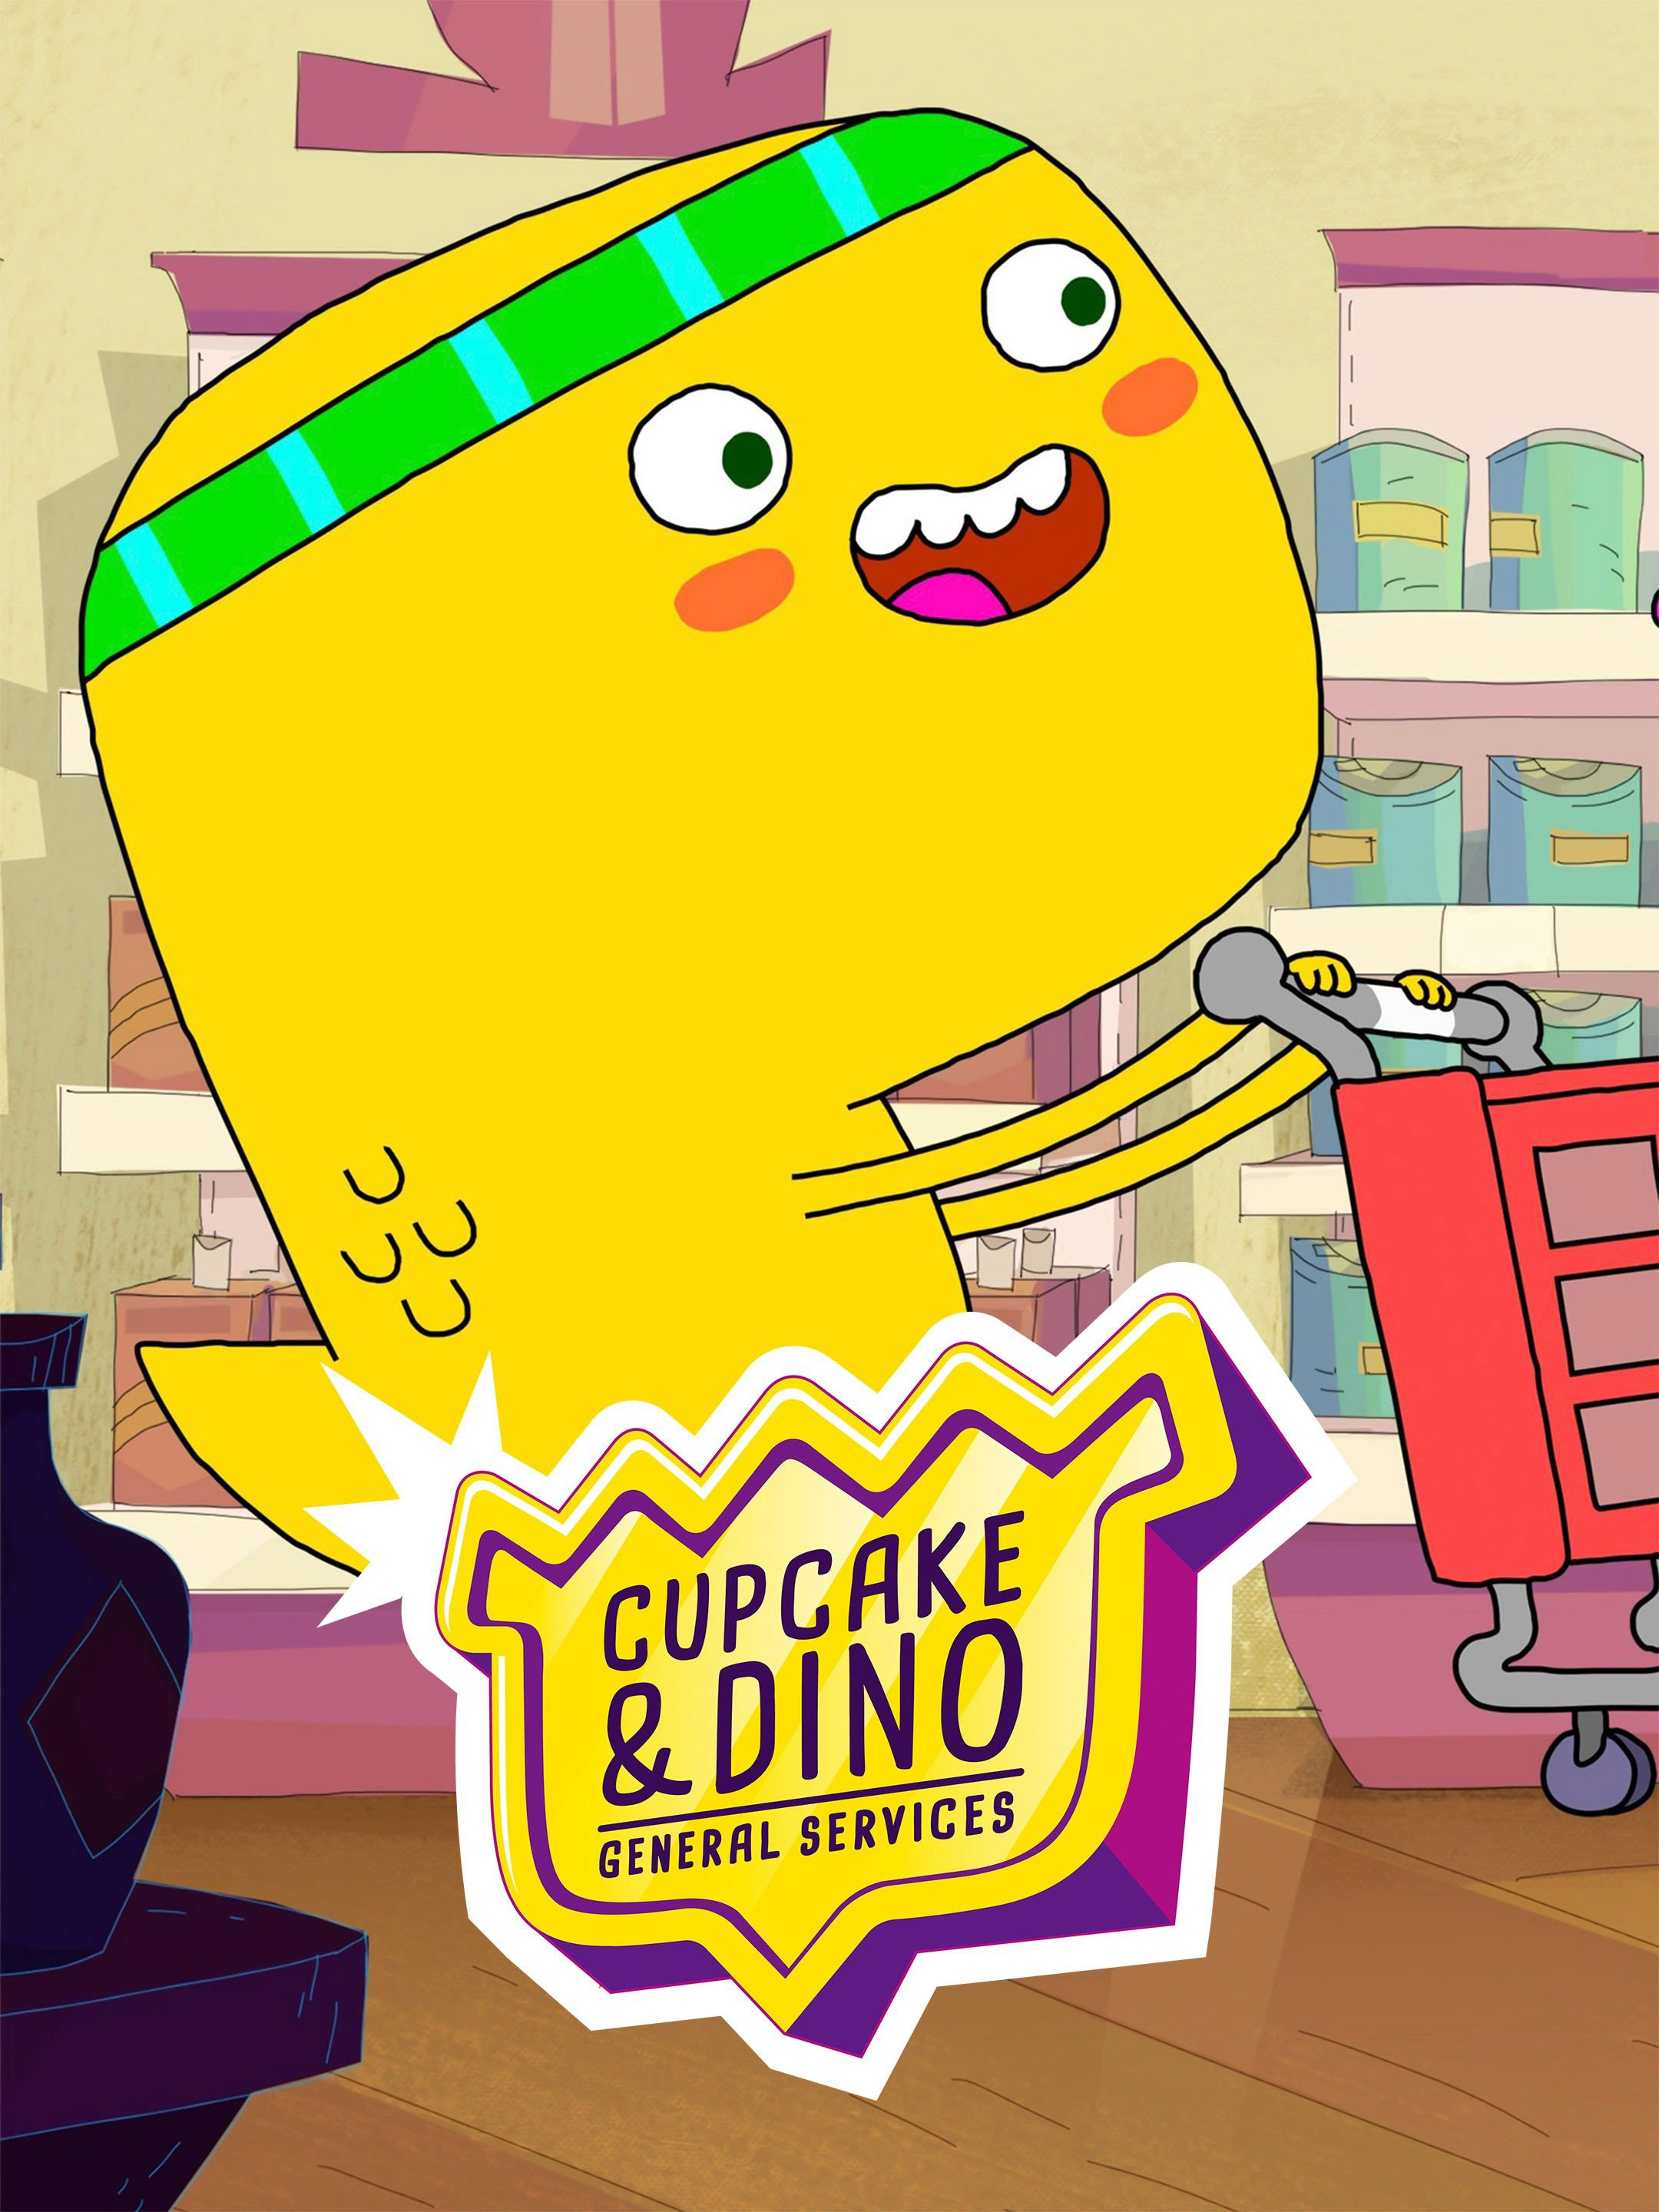 Cupcake & Dino - Dịch vụ tổng hợp (Phần 1) - Cupcake & Dino - General Services (Season 1)